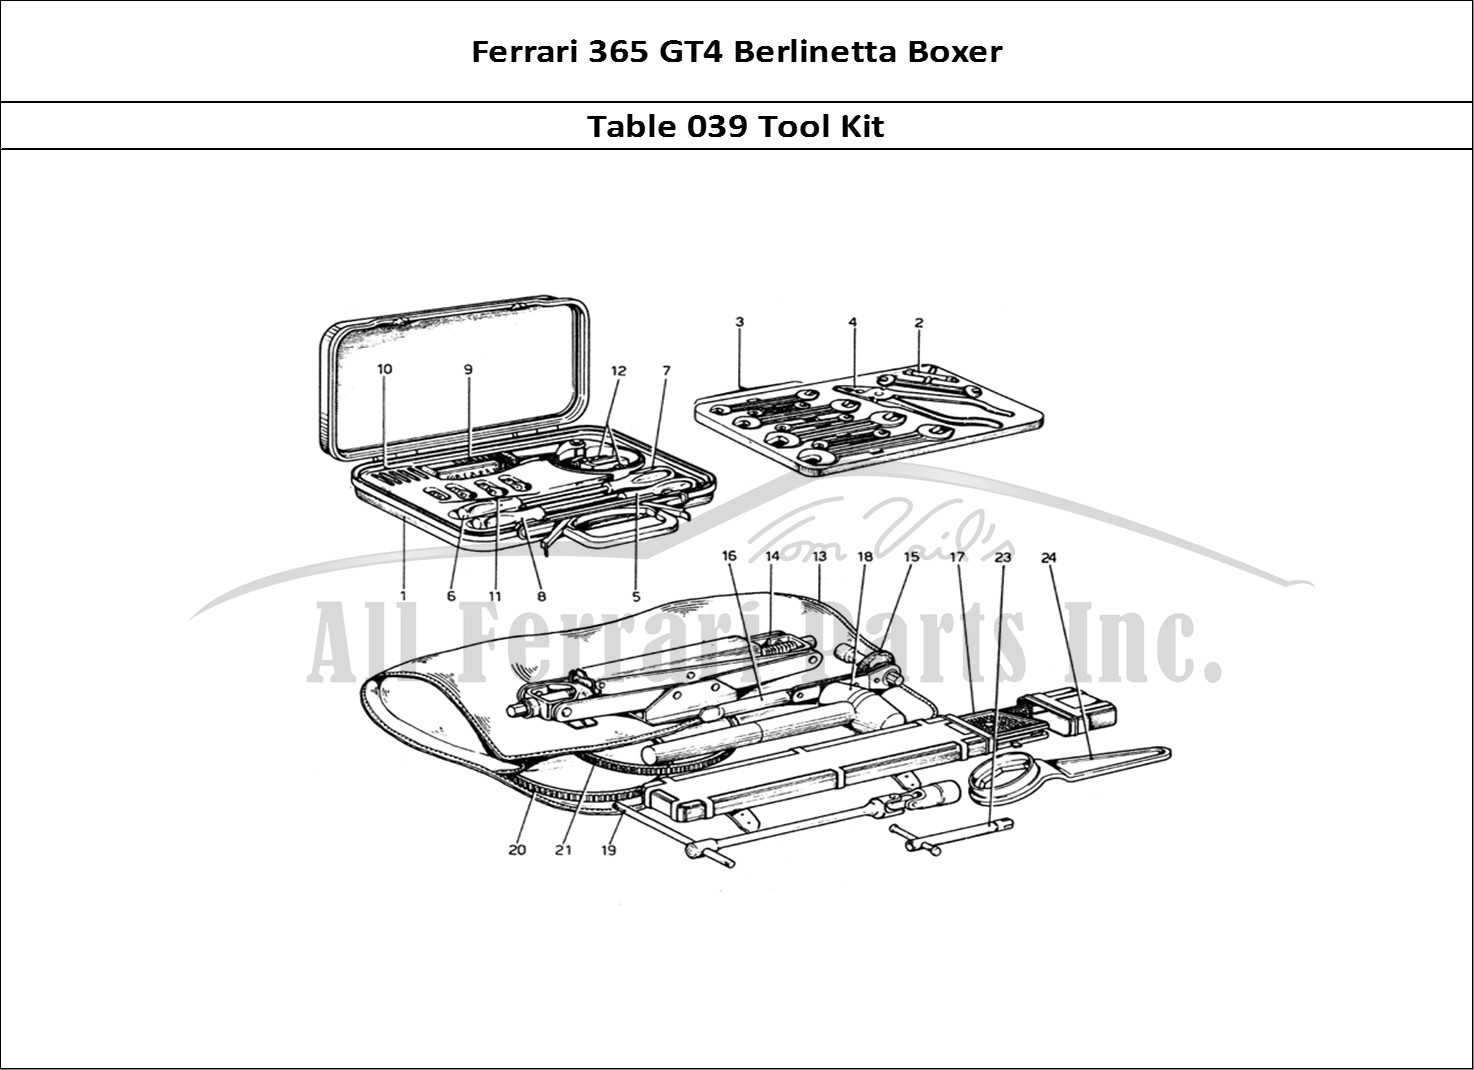 Ferrari Parts Ferrari 365 GT4 Berlinetta Boxer Page 039 Tool-Kit